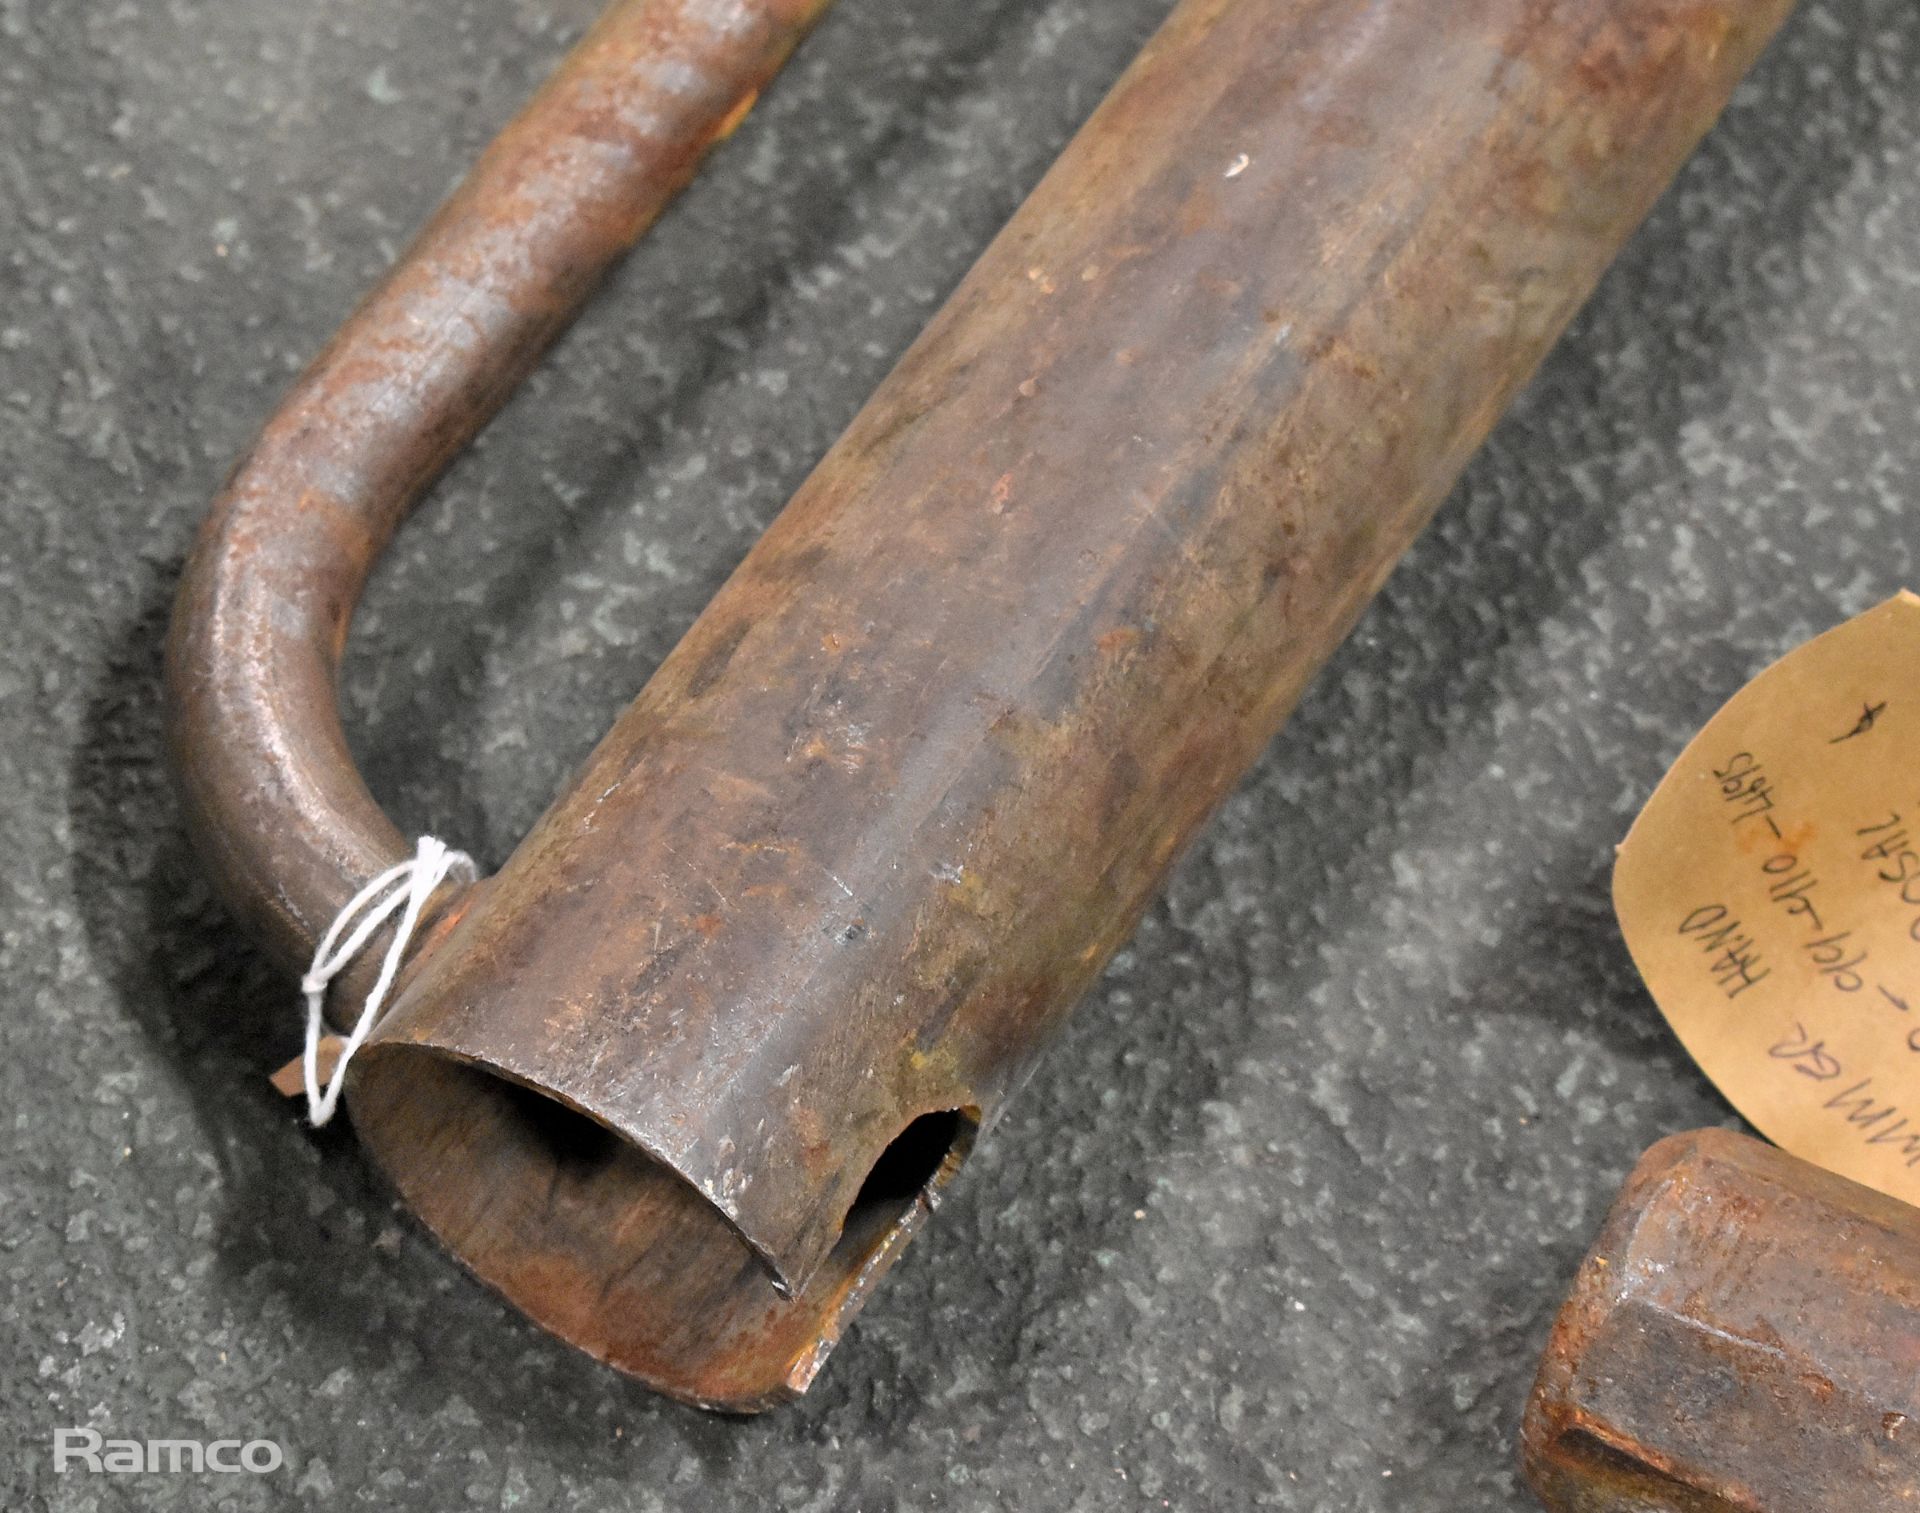 Sledge hammer - 3.5kg, 60cm handle, Metal picket post driver - Image 3 of 3